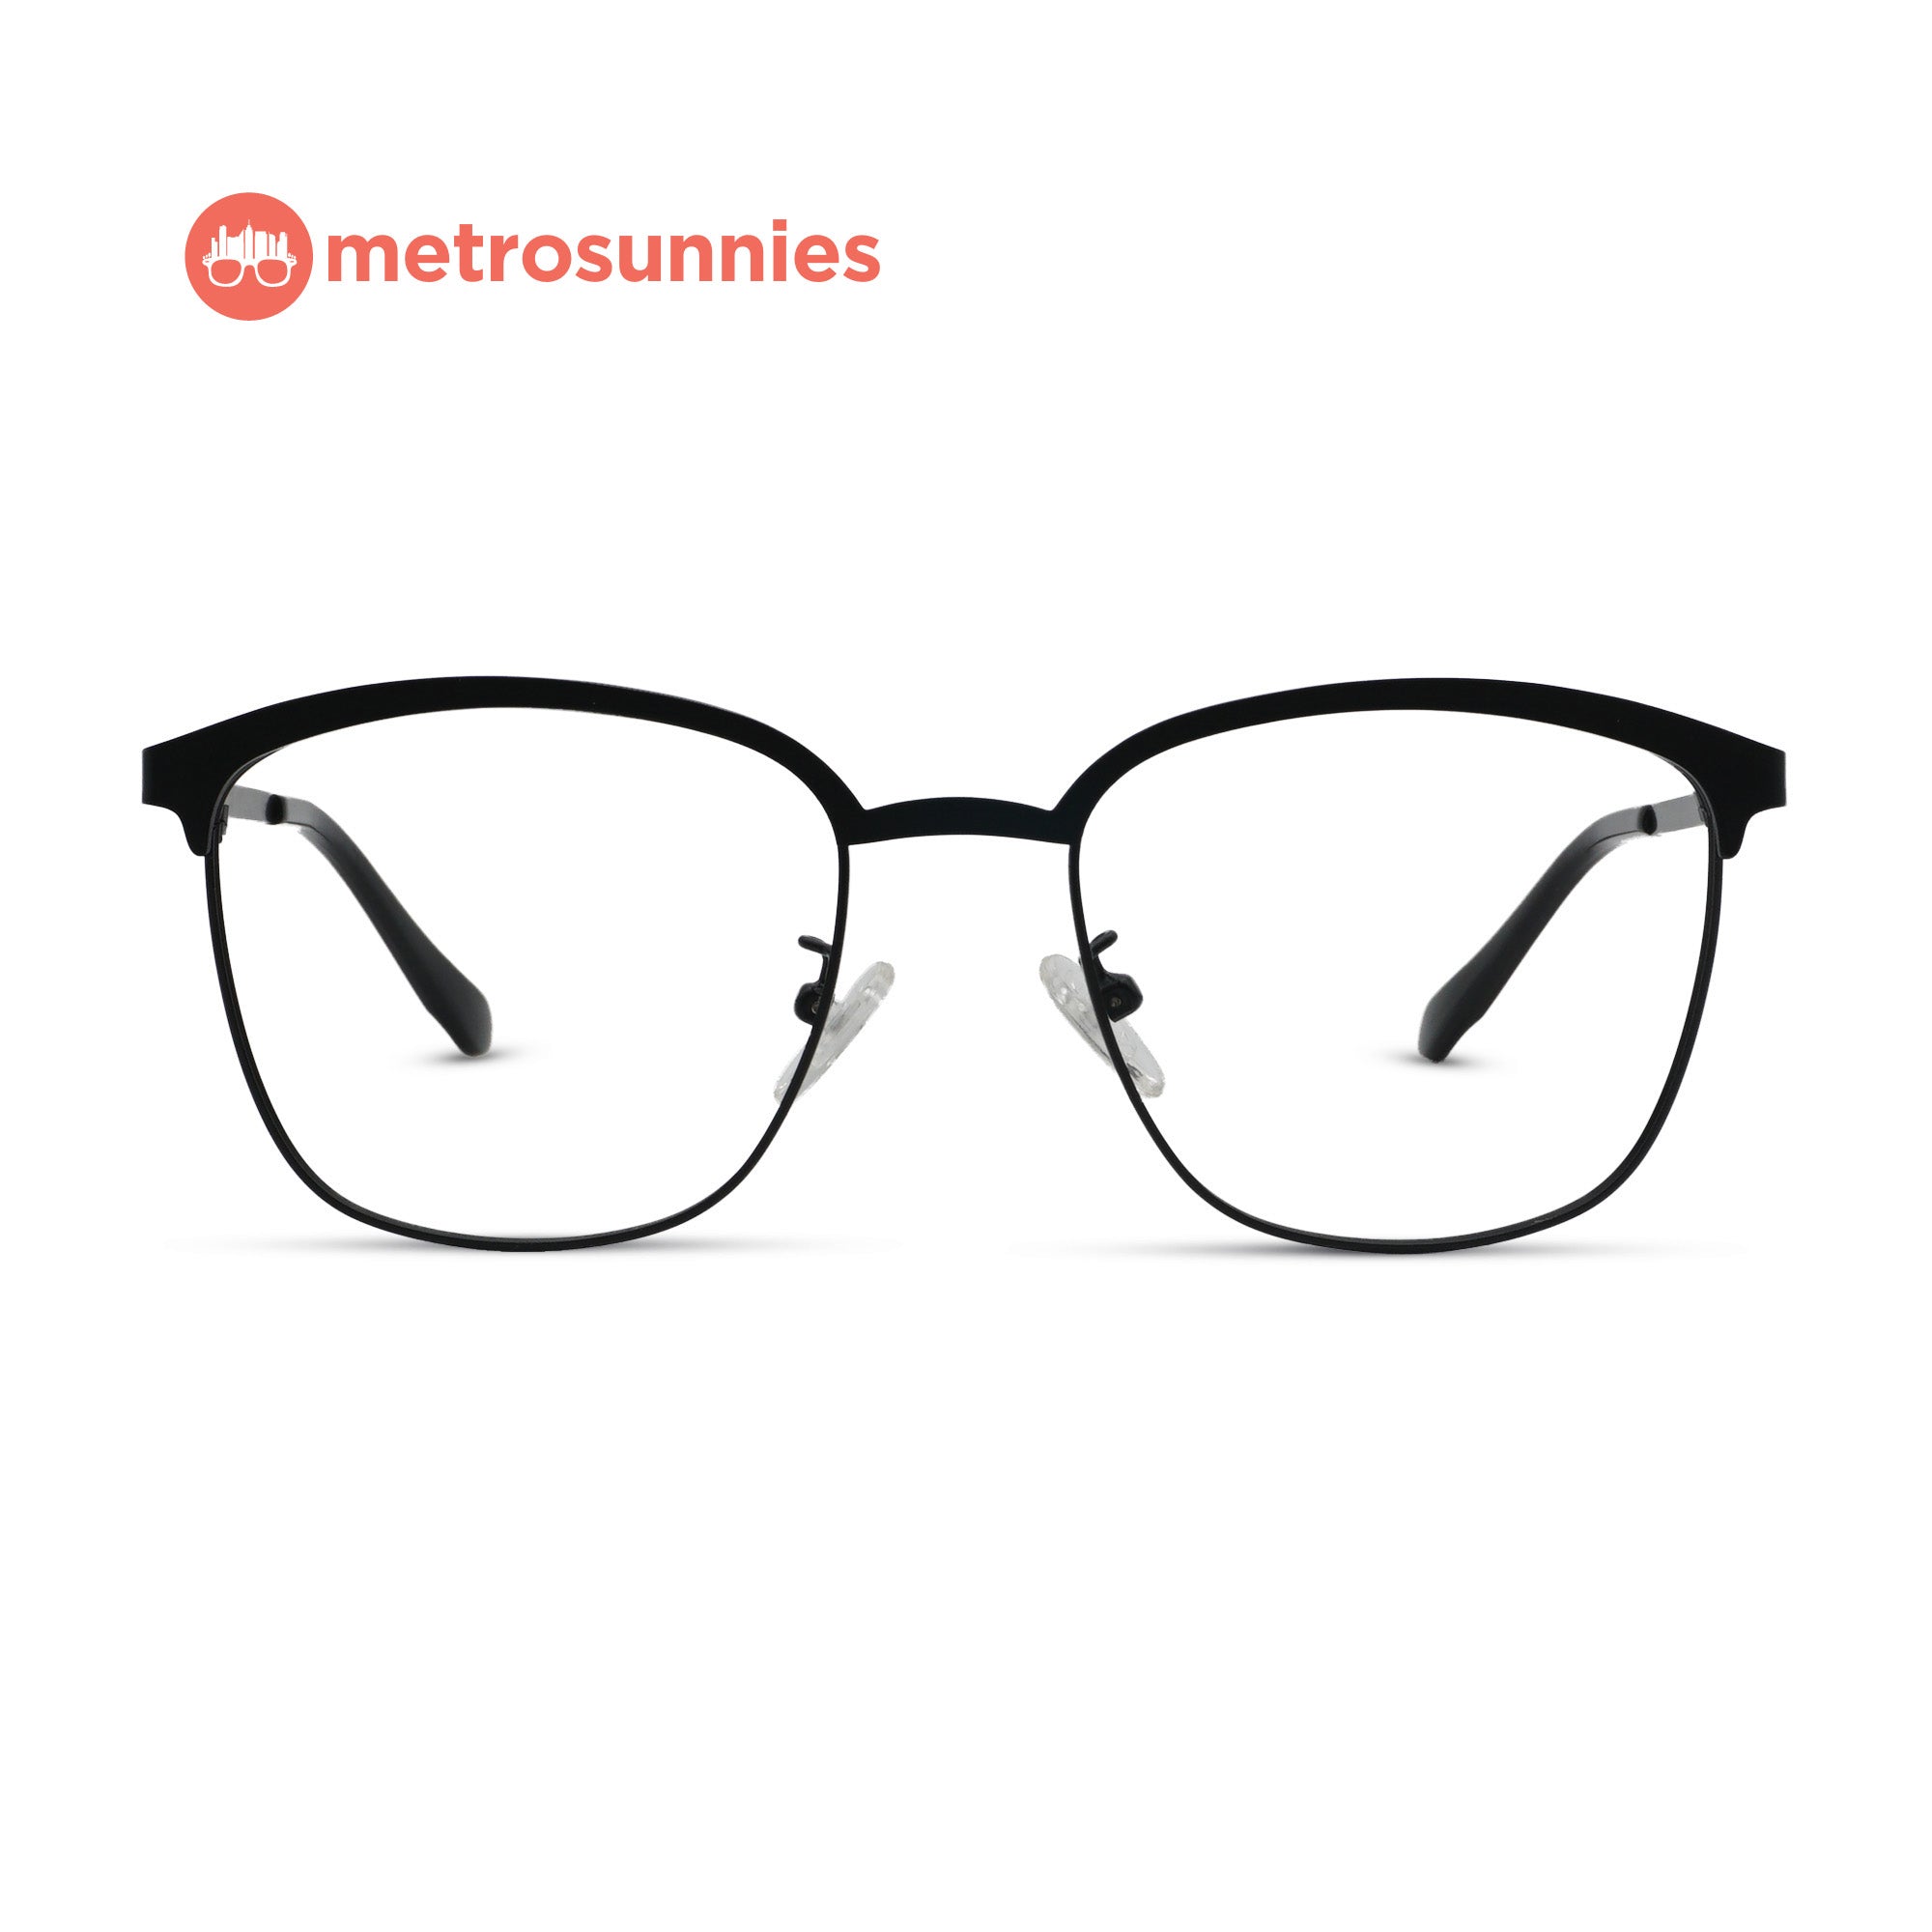 MetroSunnies Stan Specs (Black) / Replaceable Lens / Eyeglasses for Men and Women